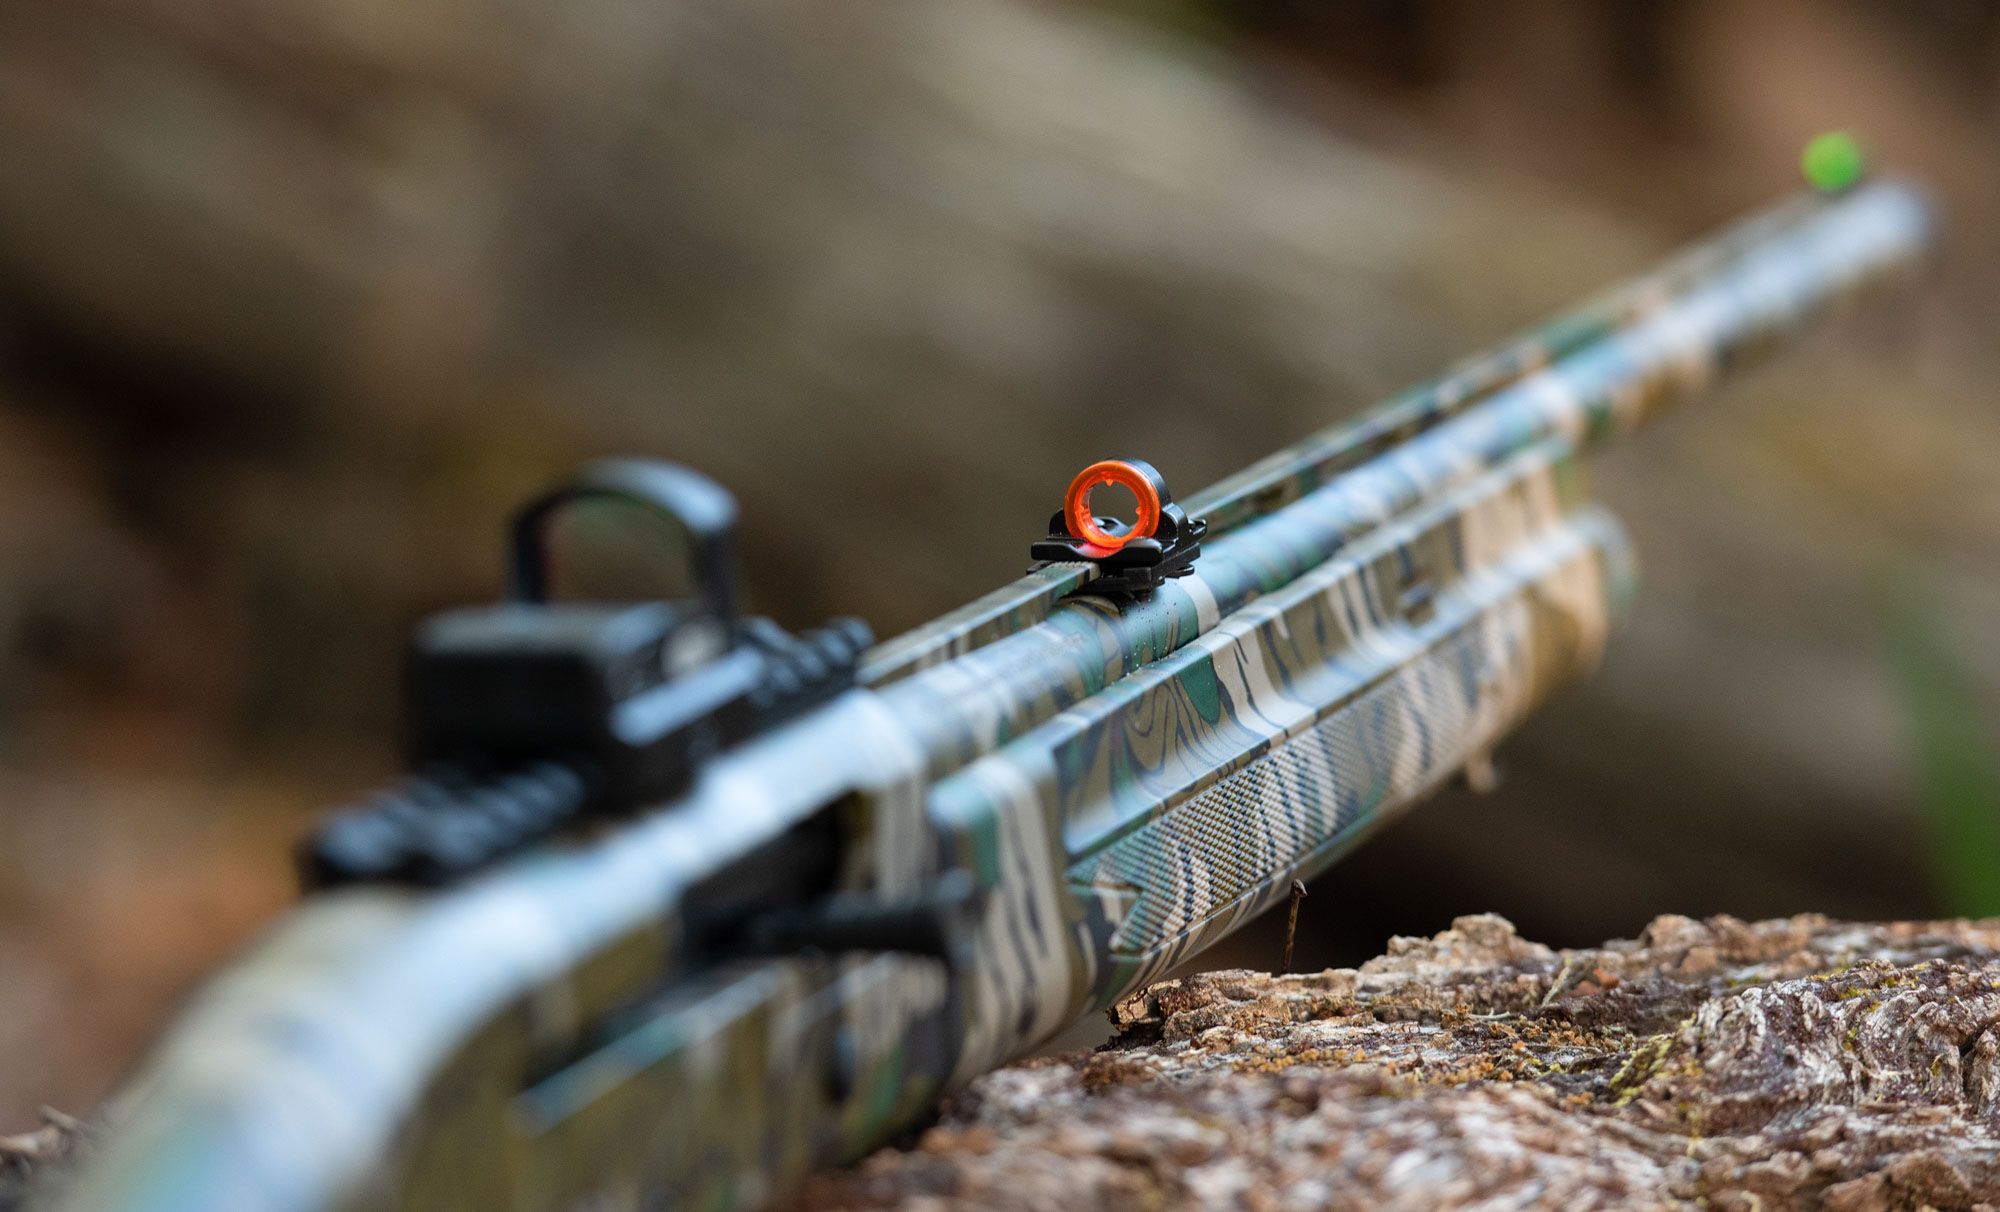 Fiber optic sights on the Mossberg SA-28 Tactical Turkey shotgun